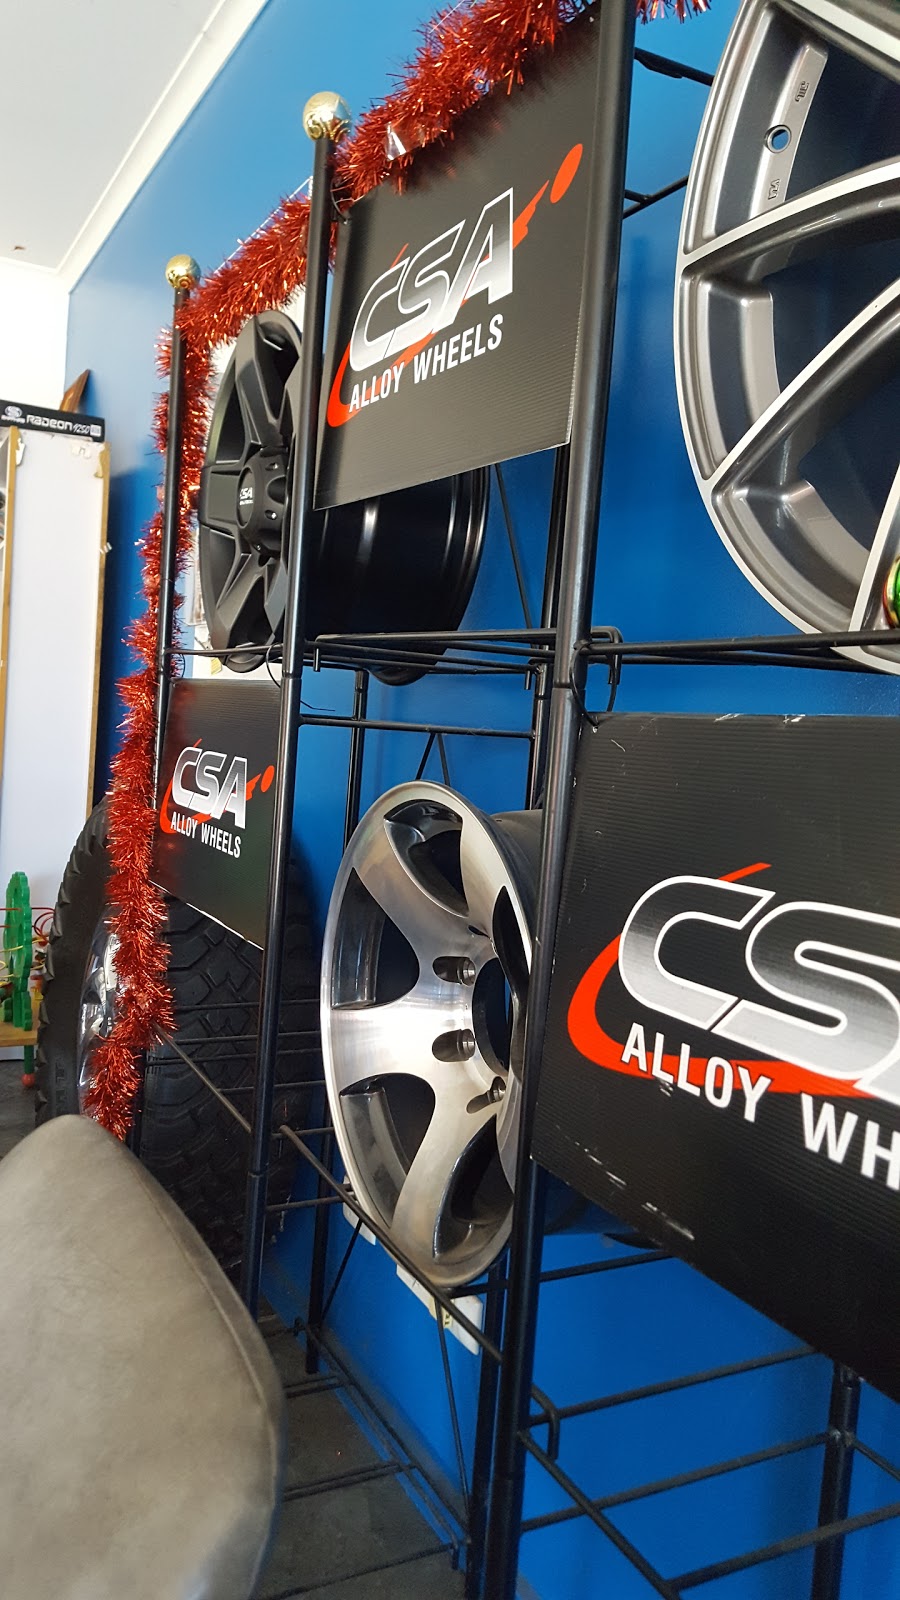 Wise Choice Tyres & More | car repair | 4 Aldershot Rd, Lonsdale SA 5160, Australia | 0881204090 OR +61 8 8120 4090